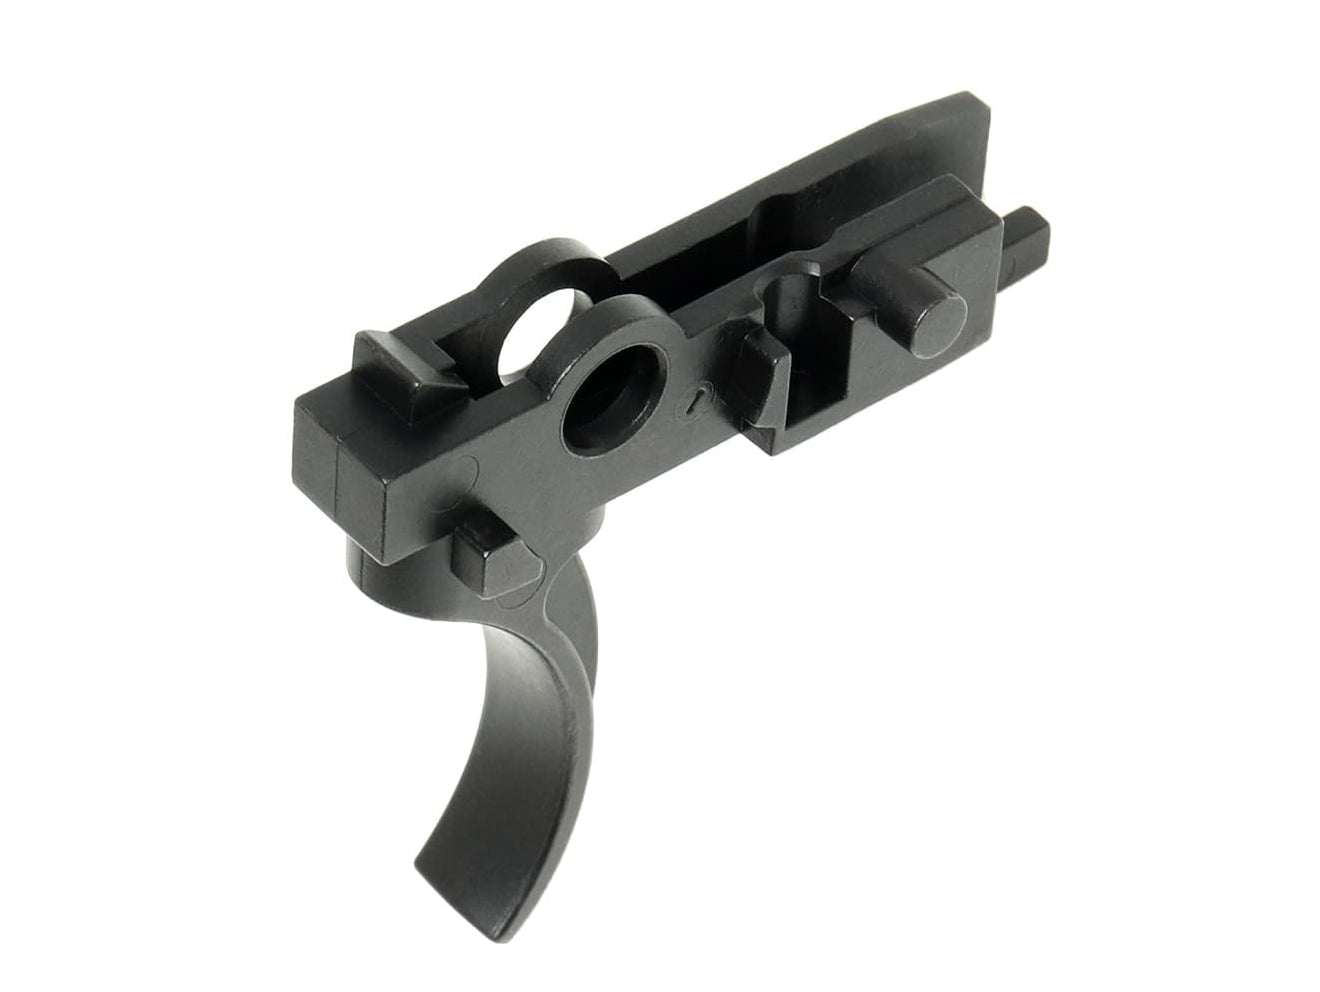 Guns Modify MIMスチール ハンマー/ディスコネクター/トリガーセット for TM GBB M4